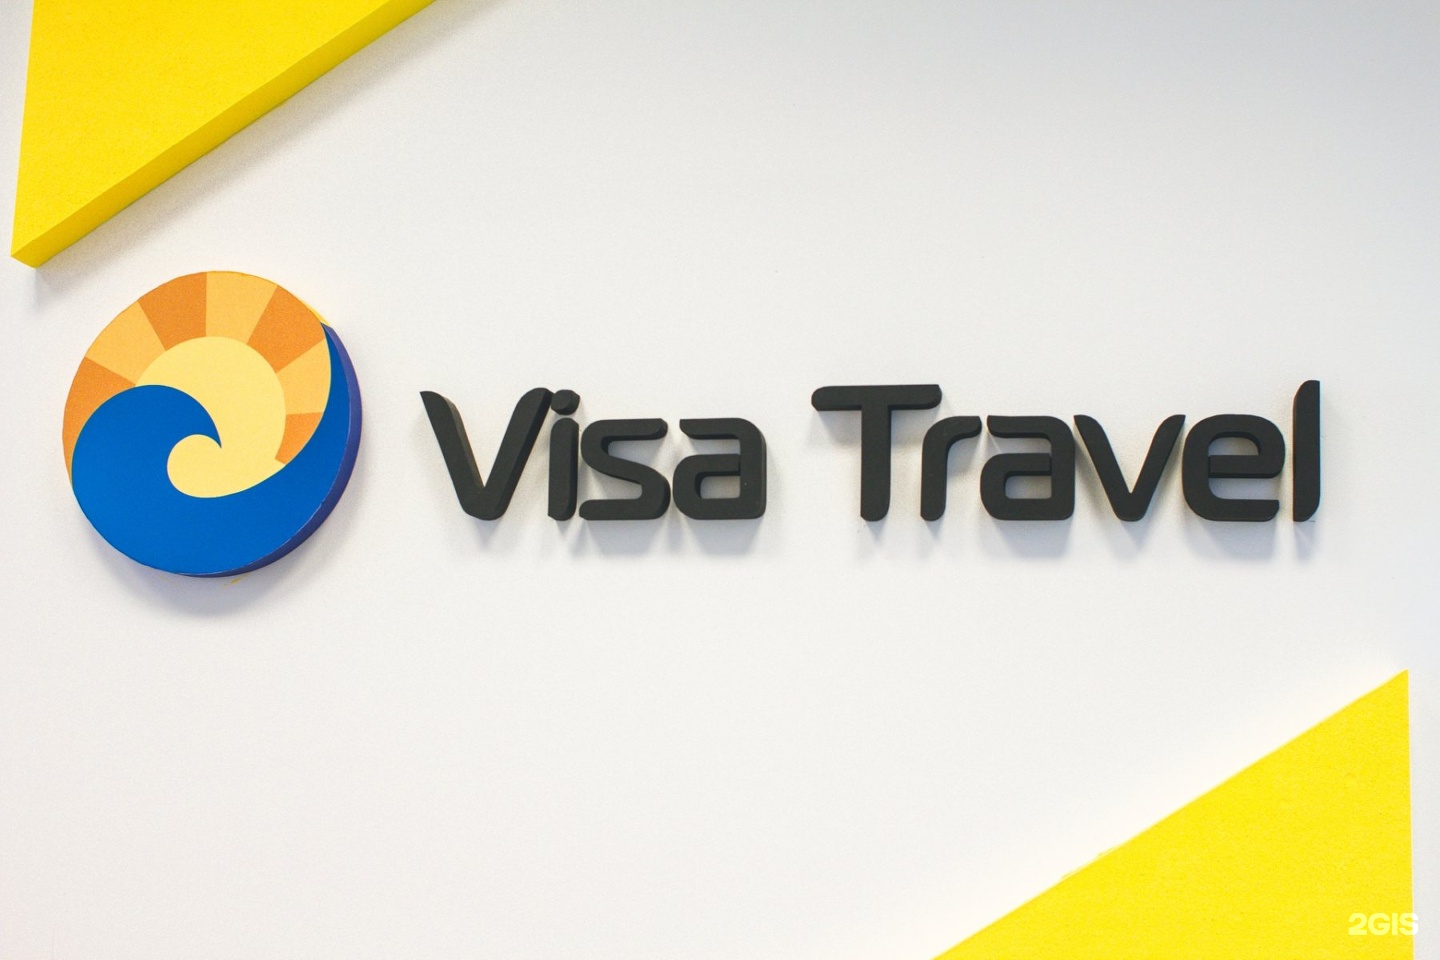 Visa travel 2. Visa Travel. Travel visa Agency. Visa Travel Липецк. Travelling visa.